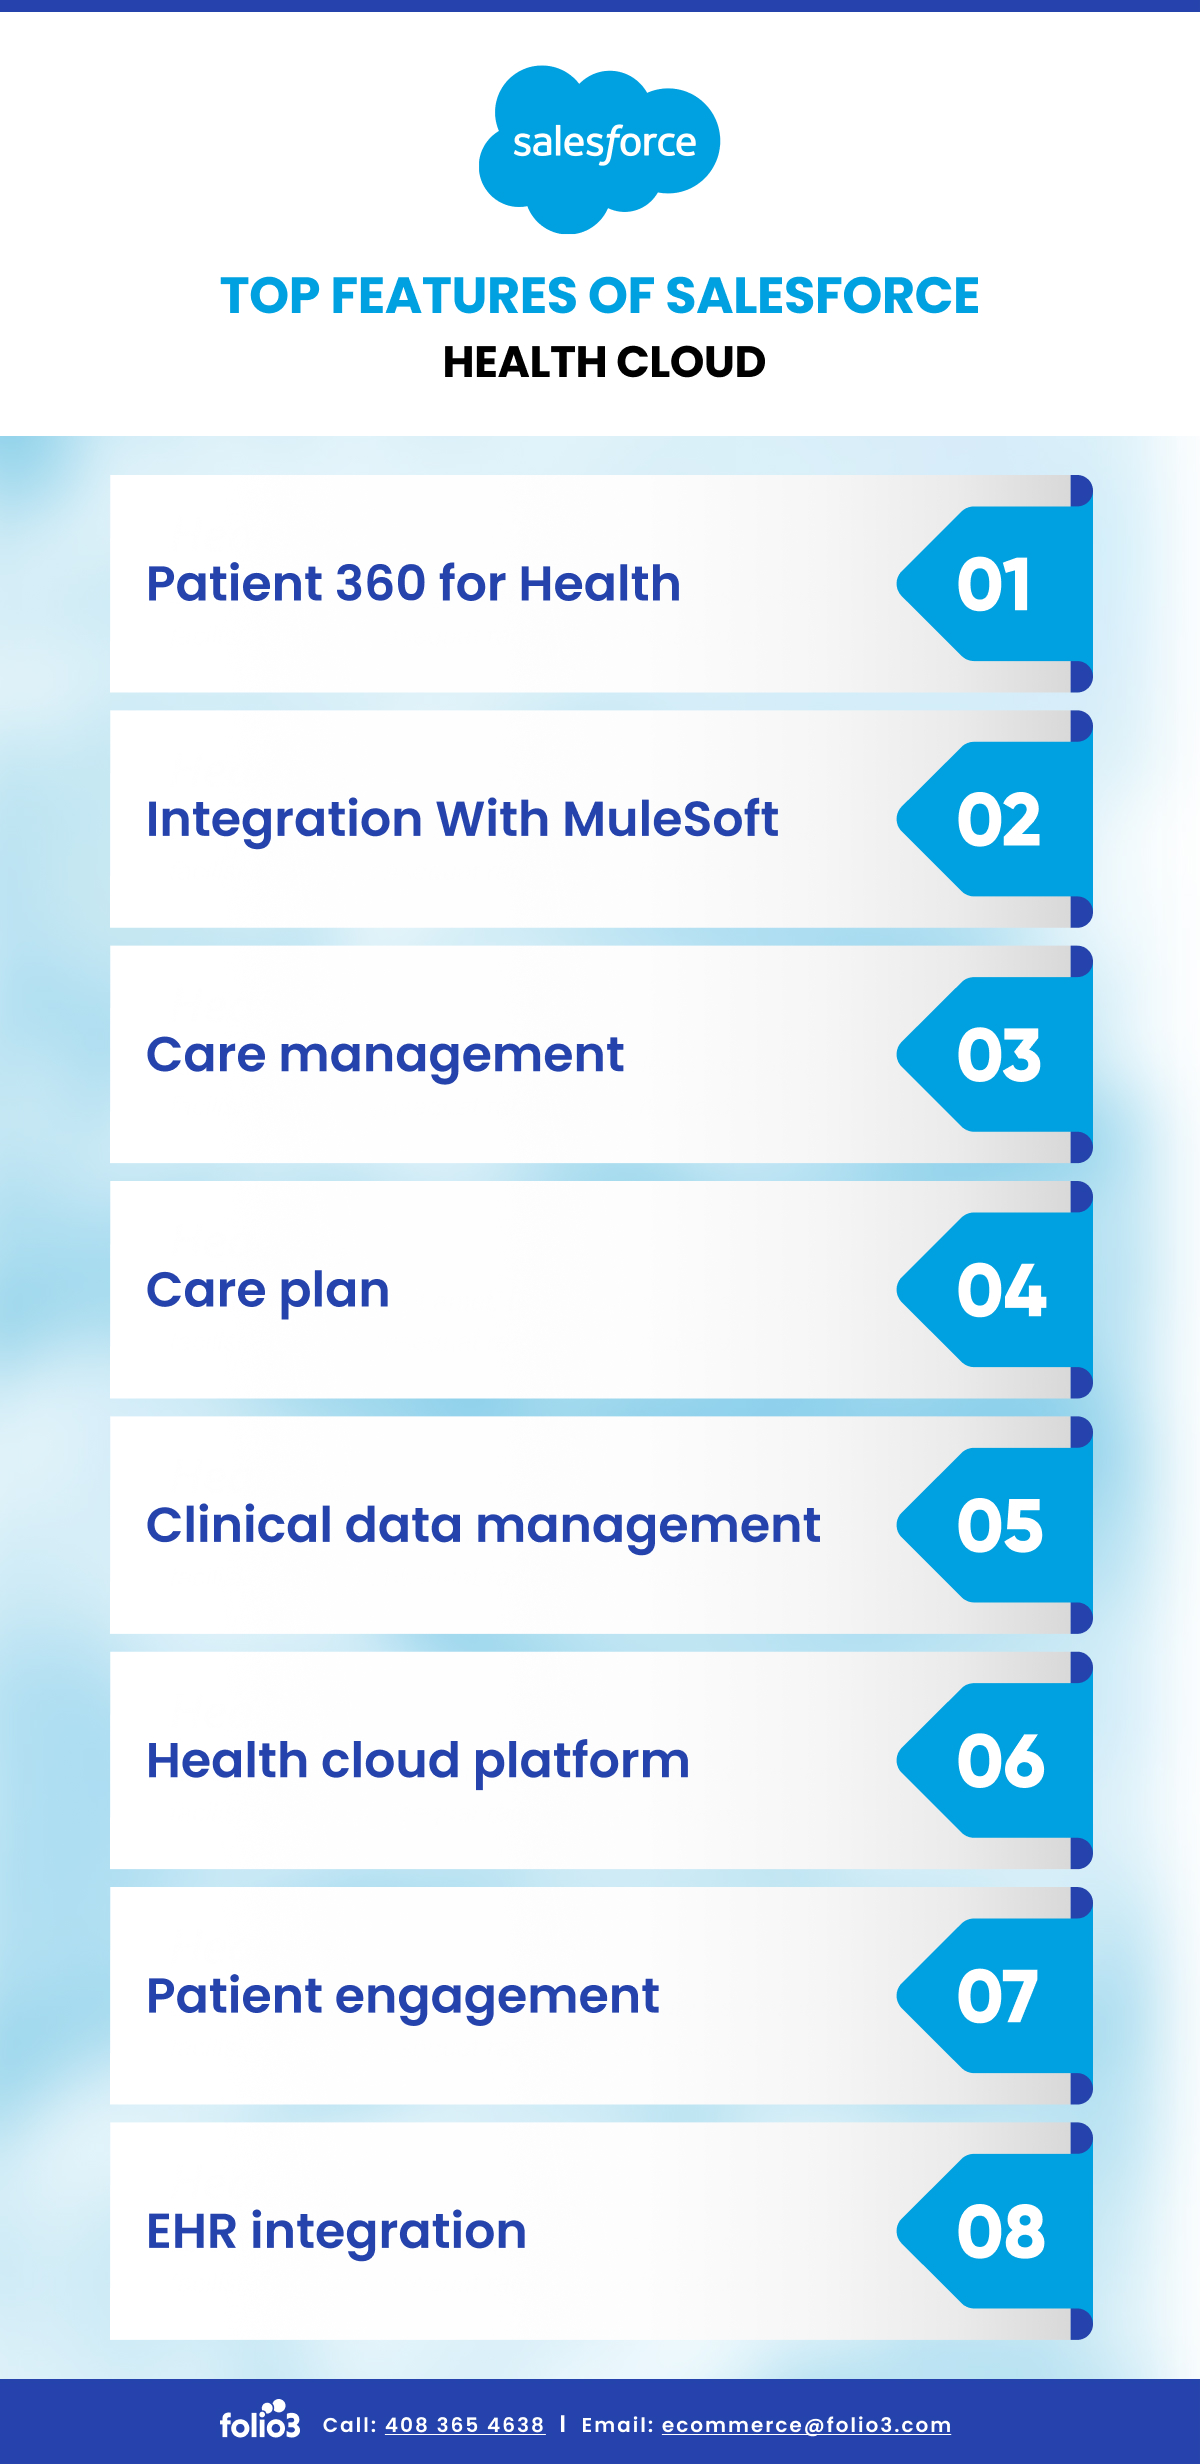 Top Features of Salesforce Health Cloud